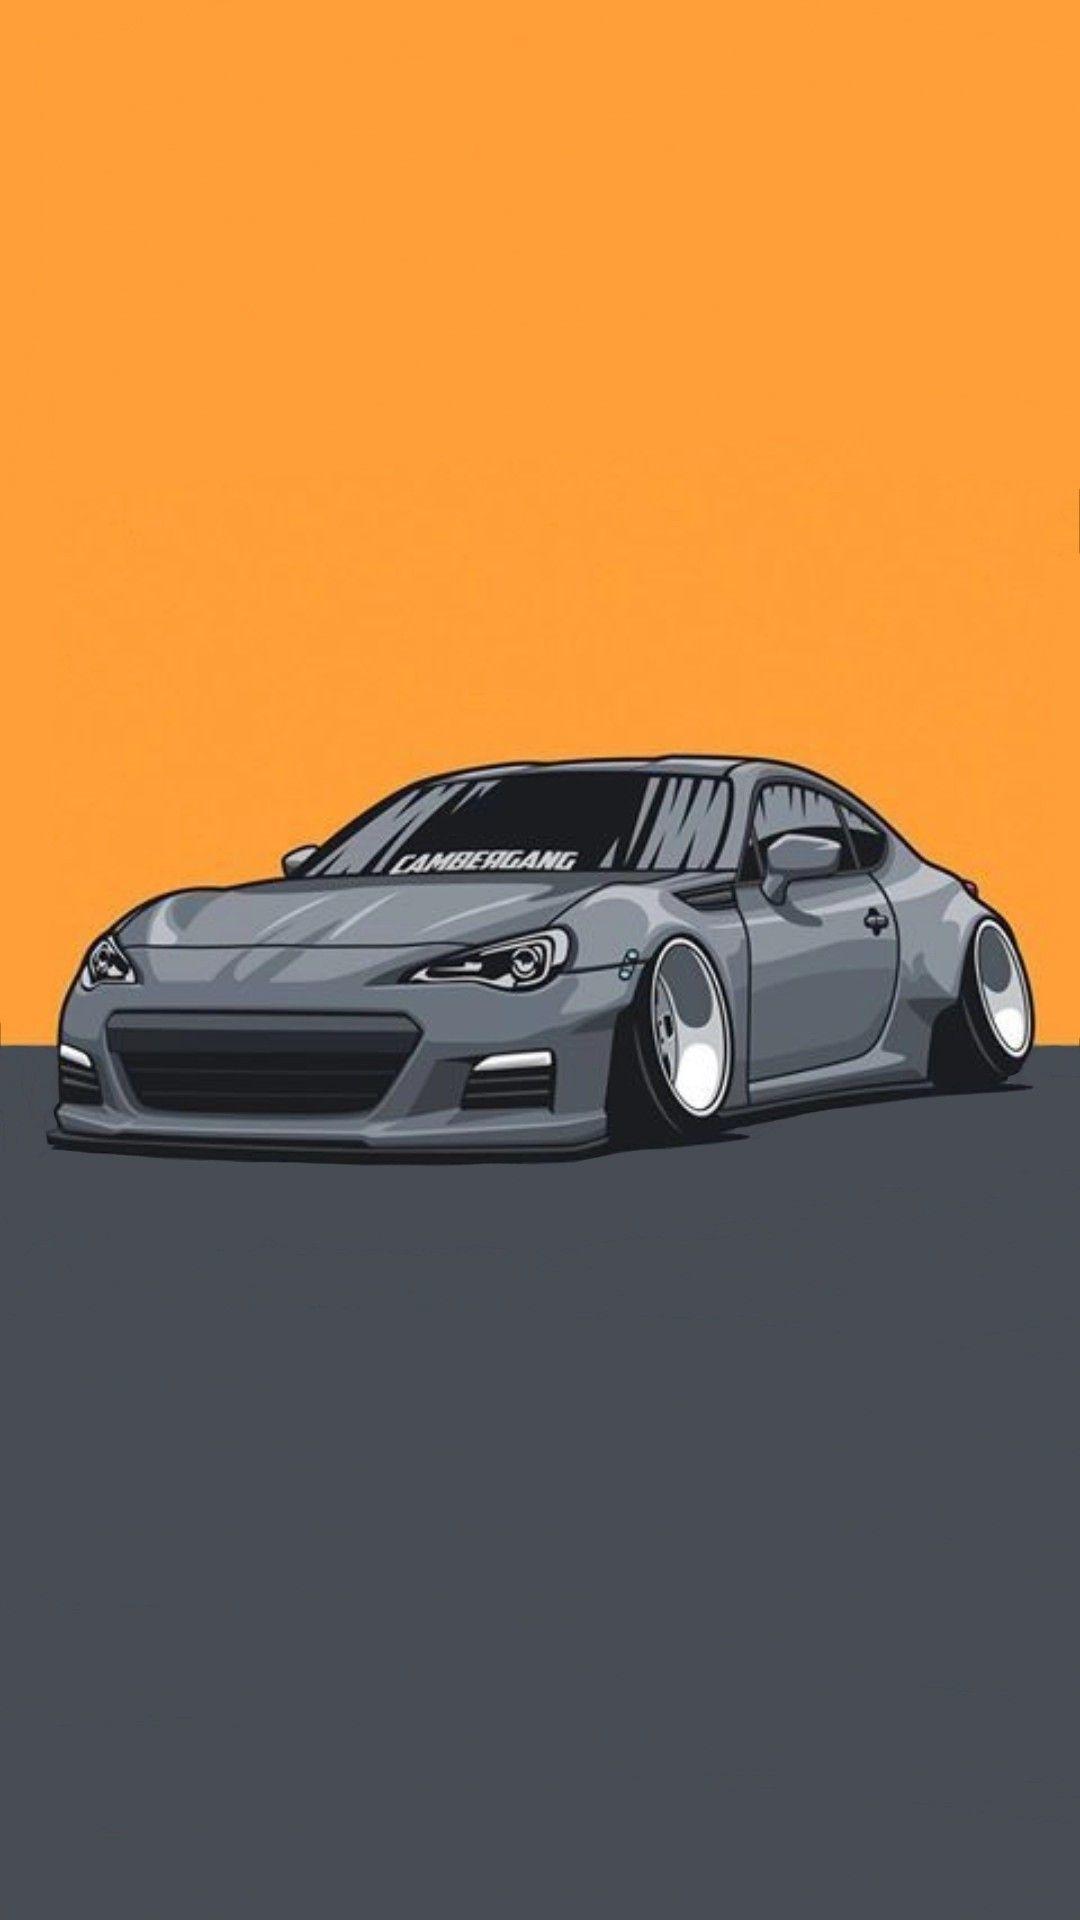 Bmw Car Sketch Wallpaper